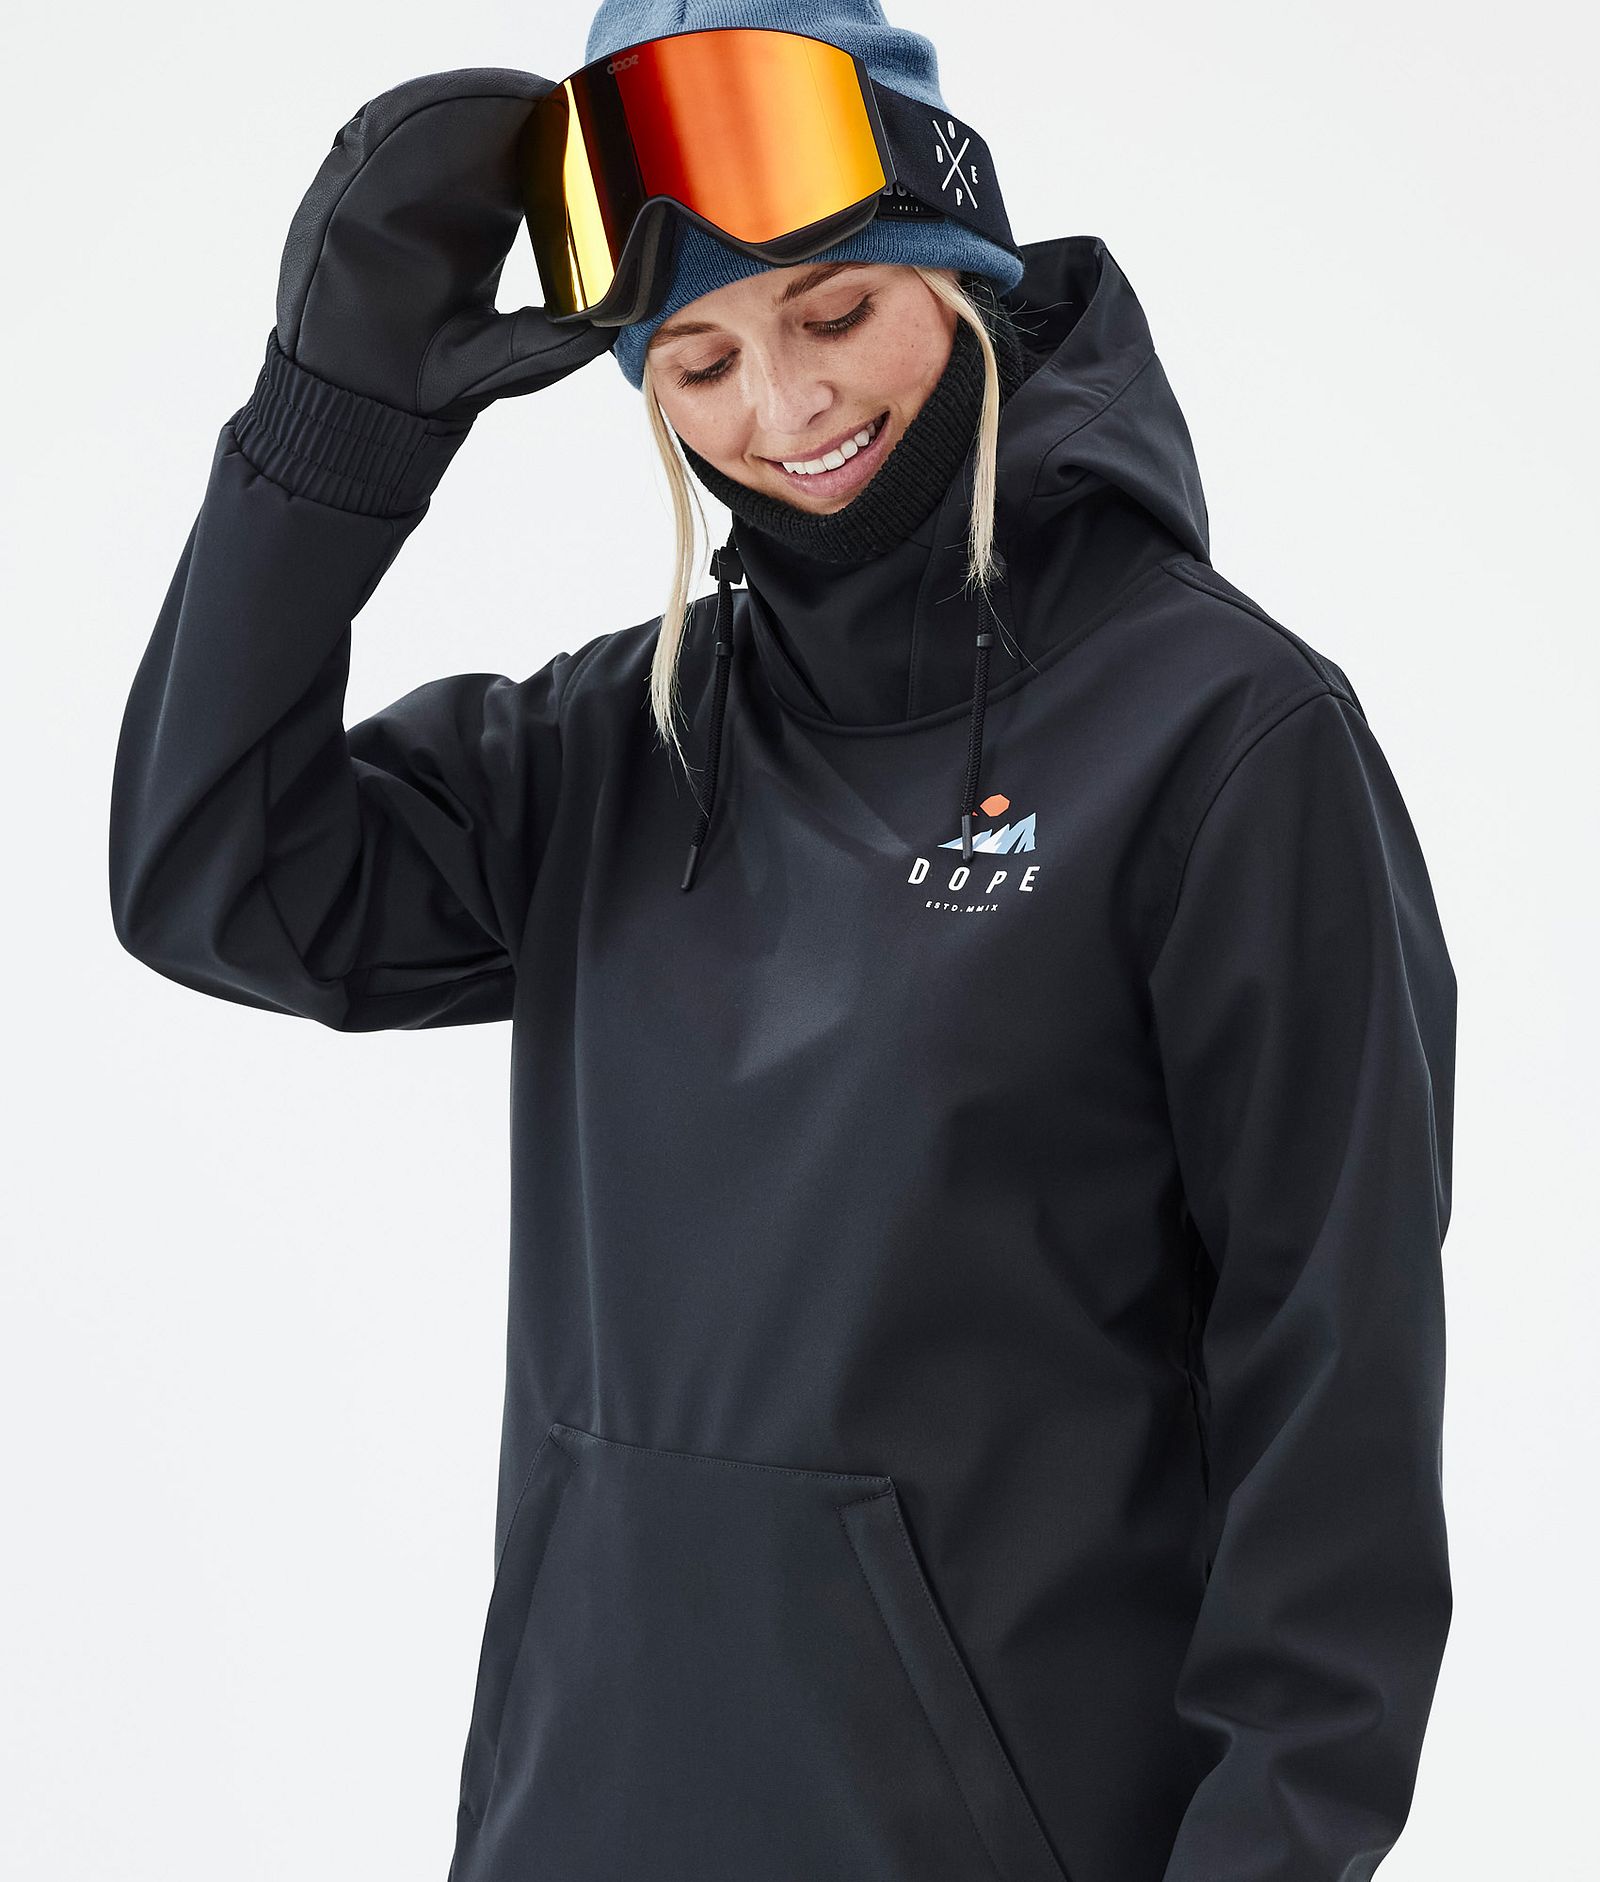 Yeti W Veste de Ski Femme Ice Black